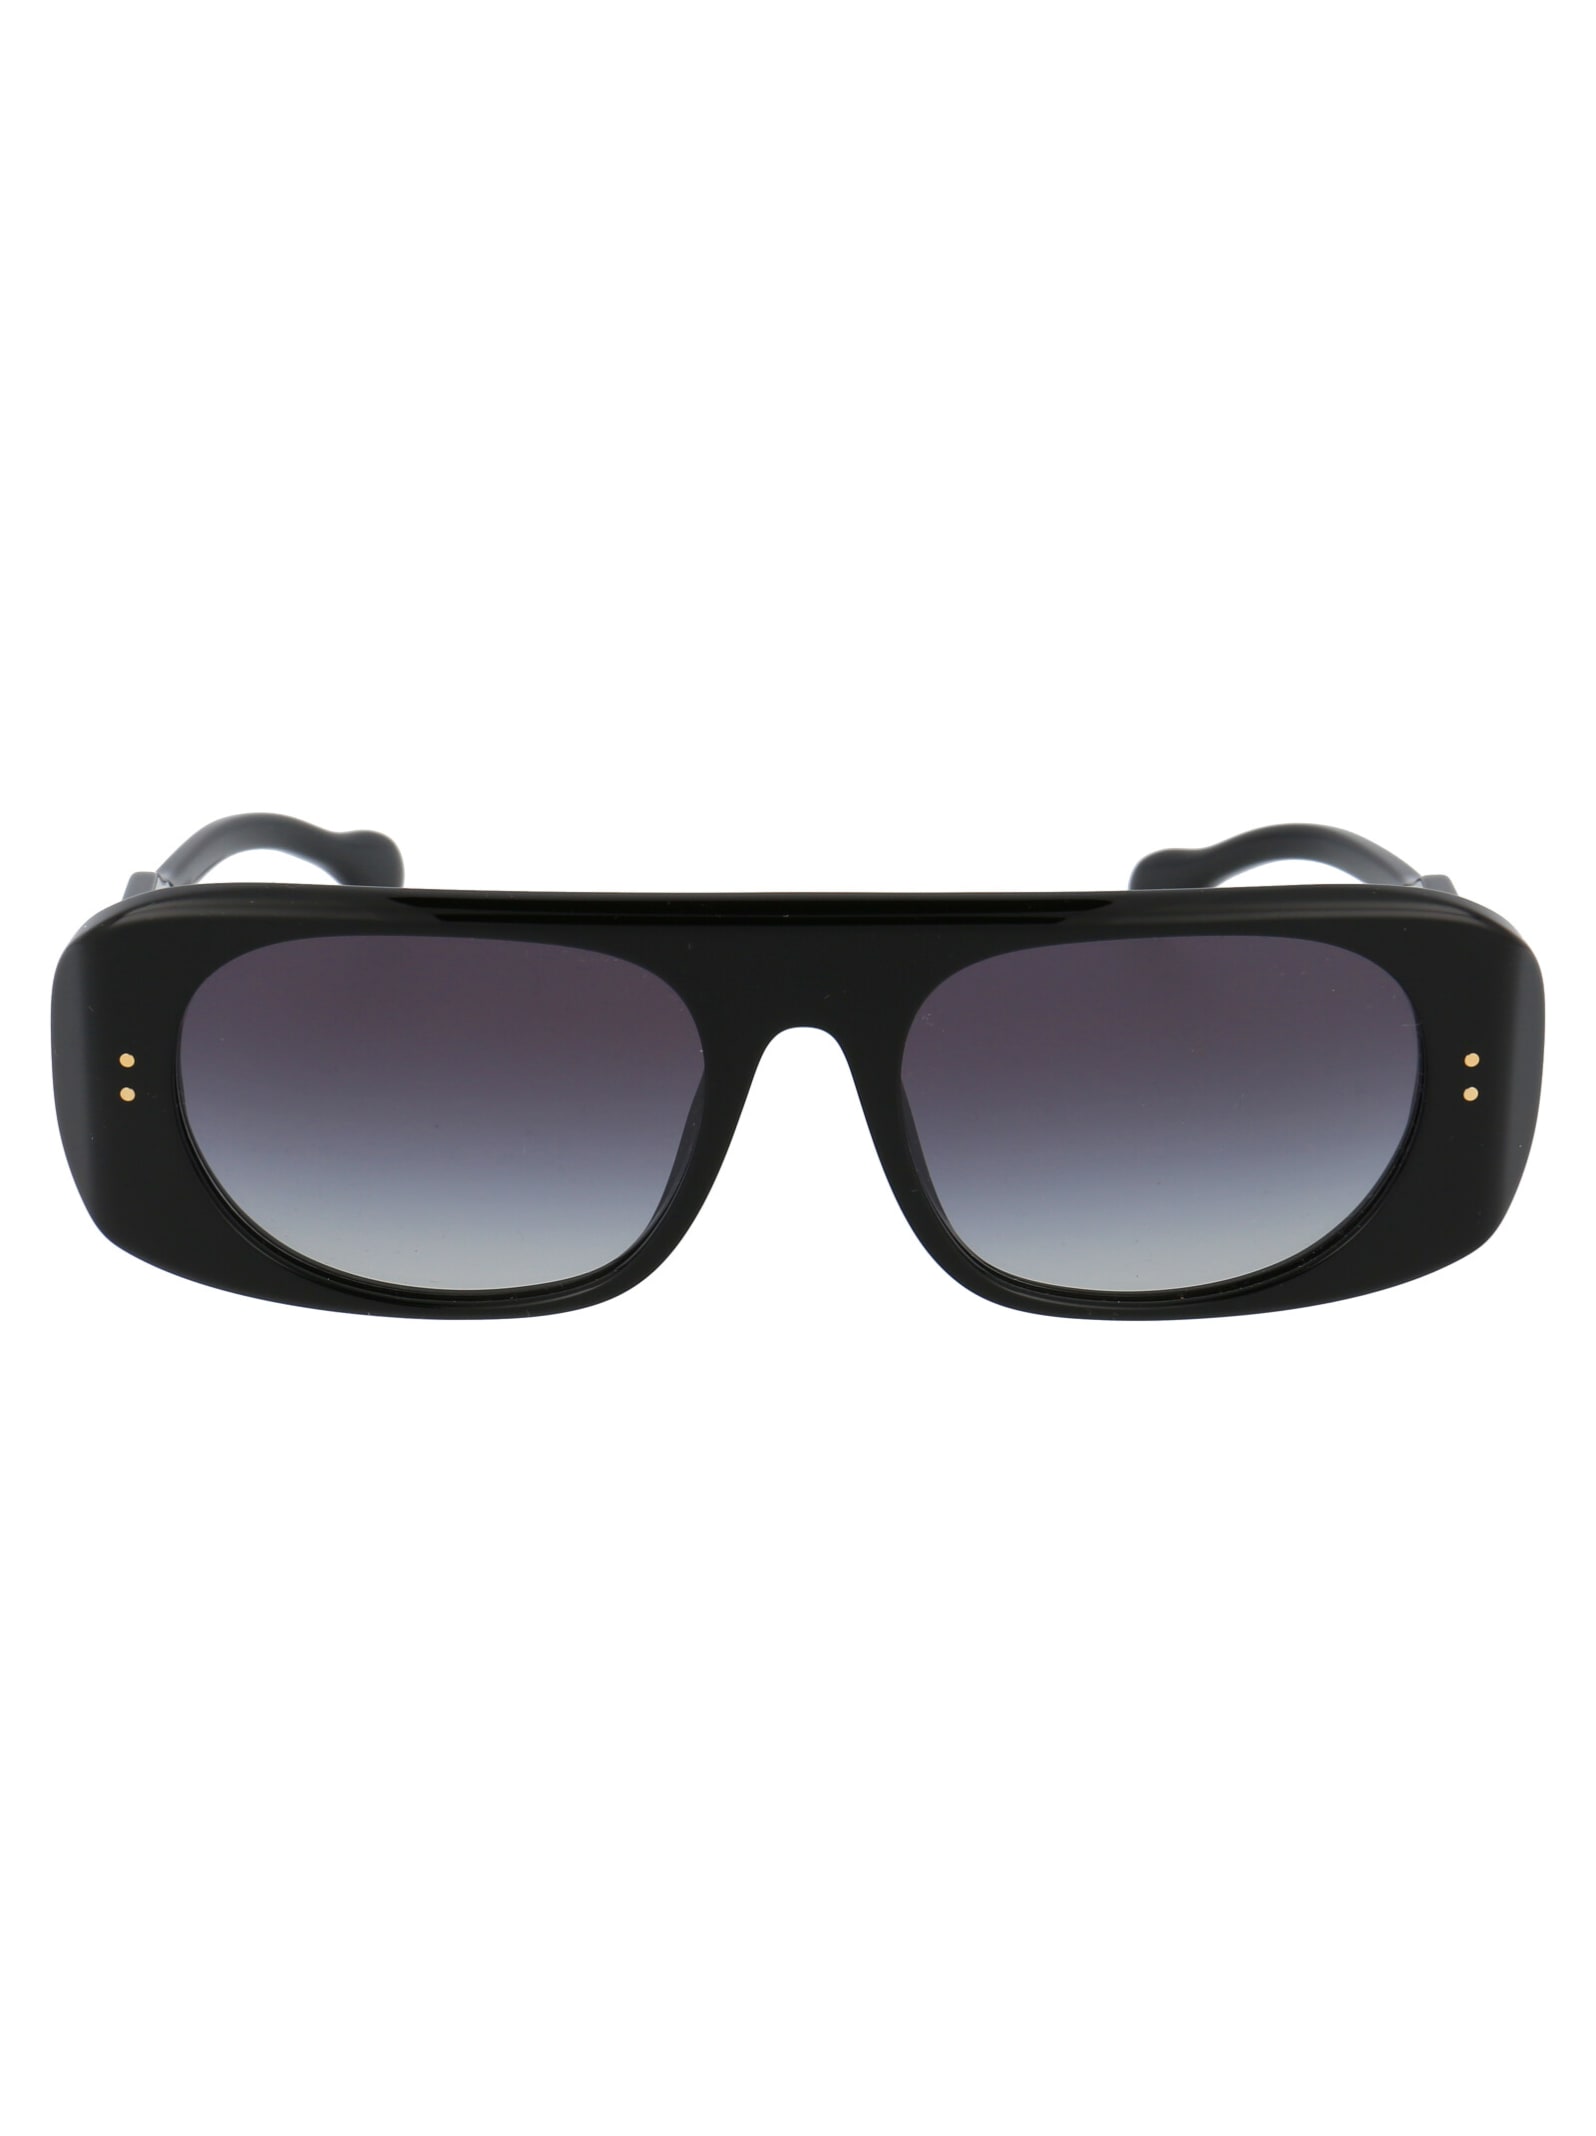 Burberry 0be4322 Sunglasses